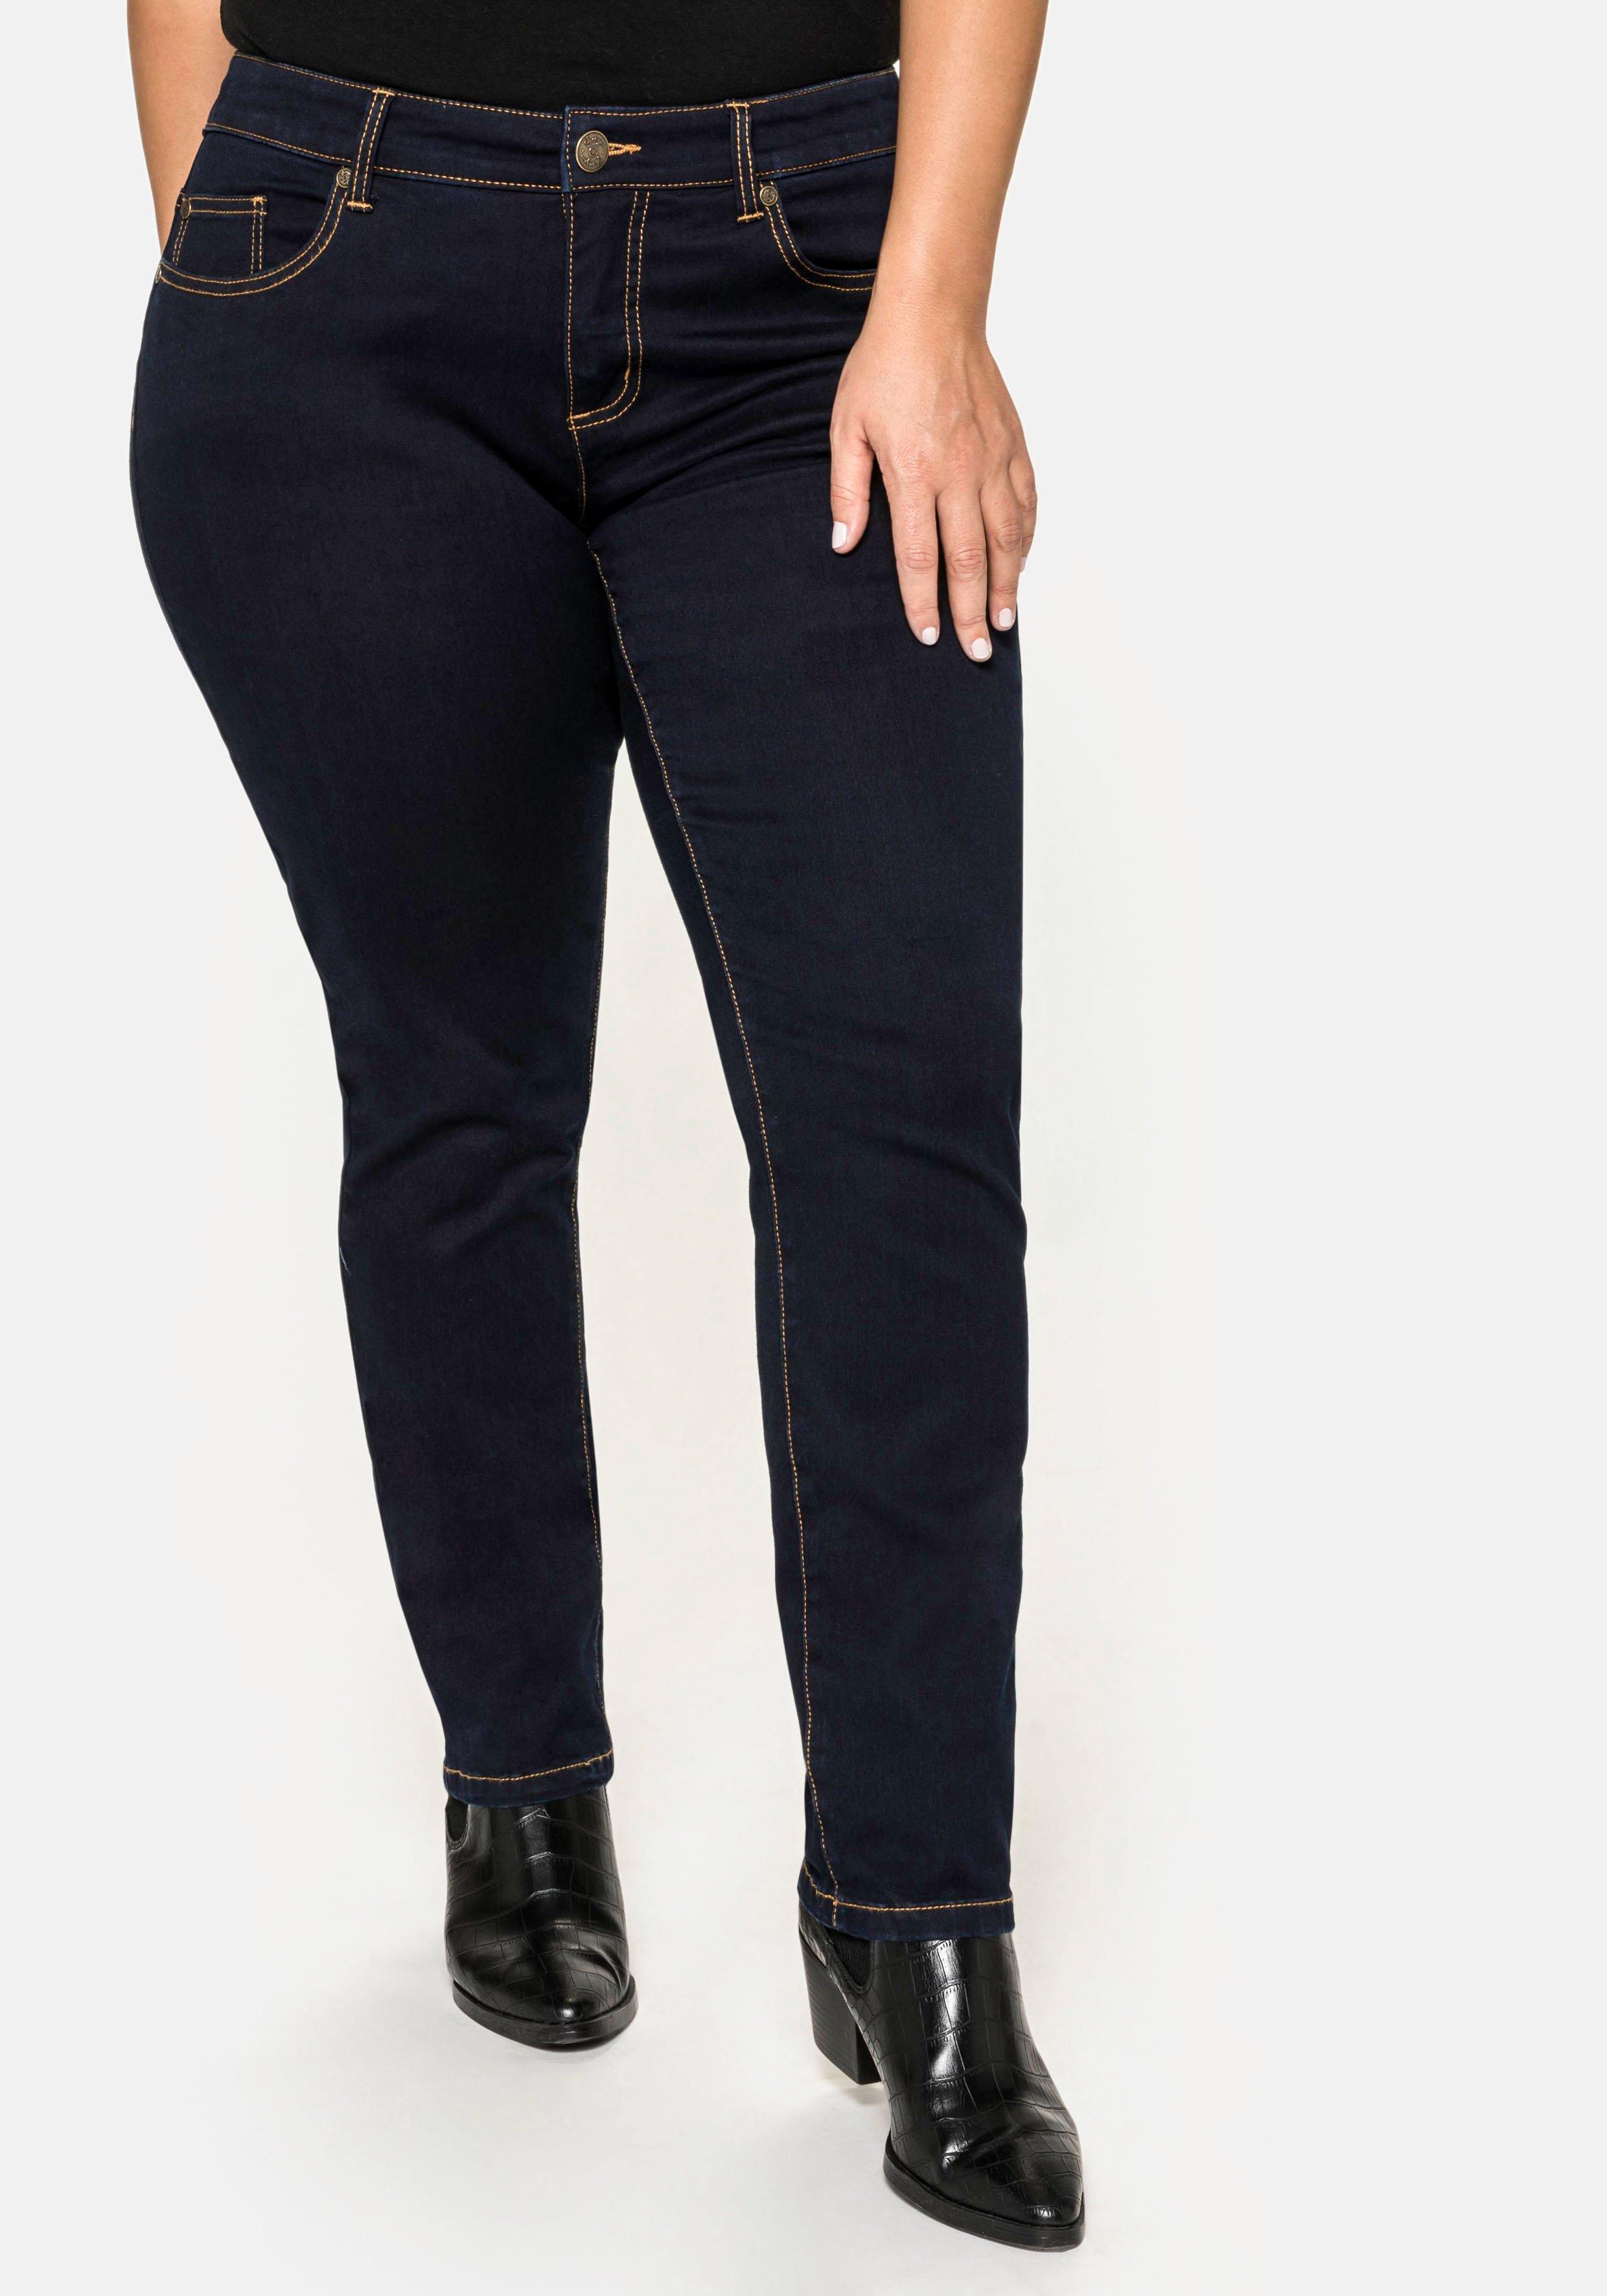 Schmale Stretch-Jeans im 5-Pocket-Stil - blue Denim sheego black 